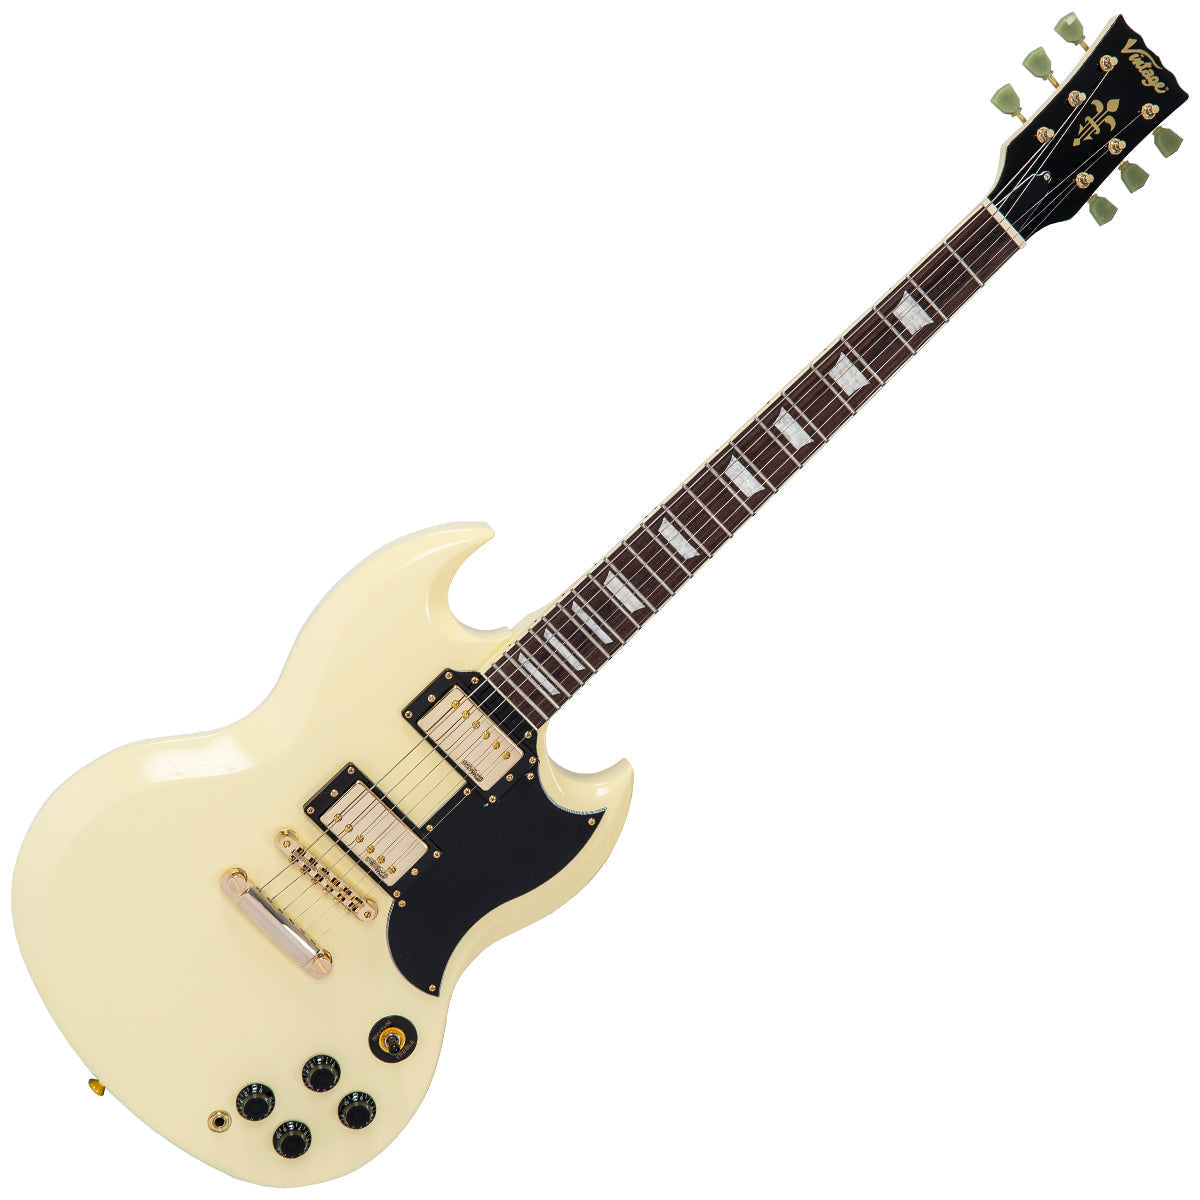 Vintage VS6 ReIssued Electric Guitar ~ Vintage White/Gold Hardware, Electric Guitar for sale at Richards Guitars.